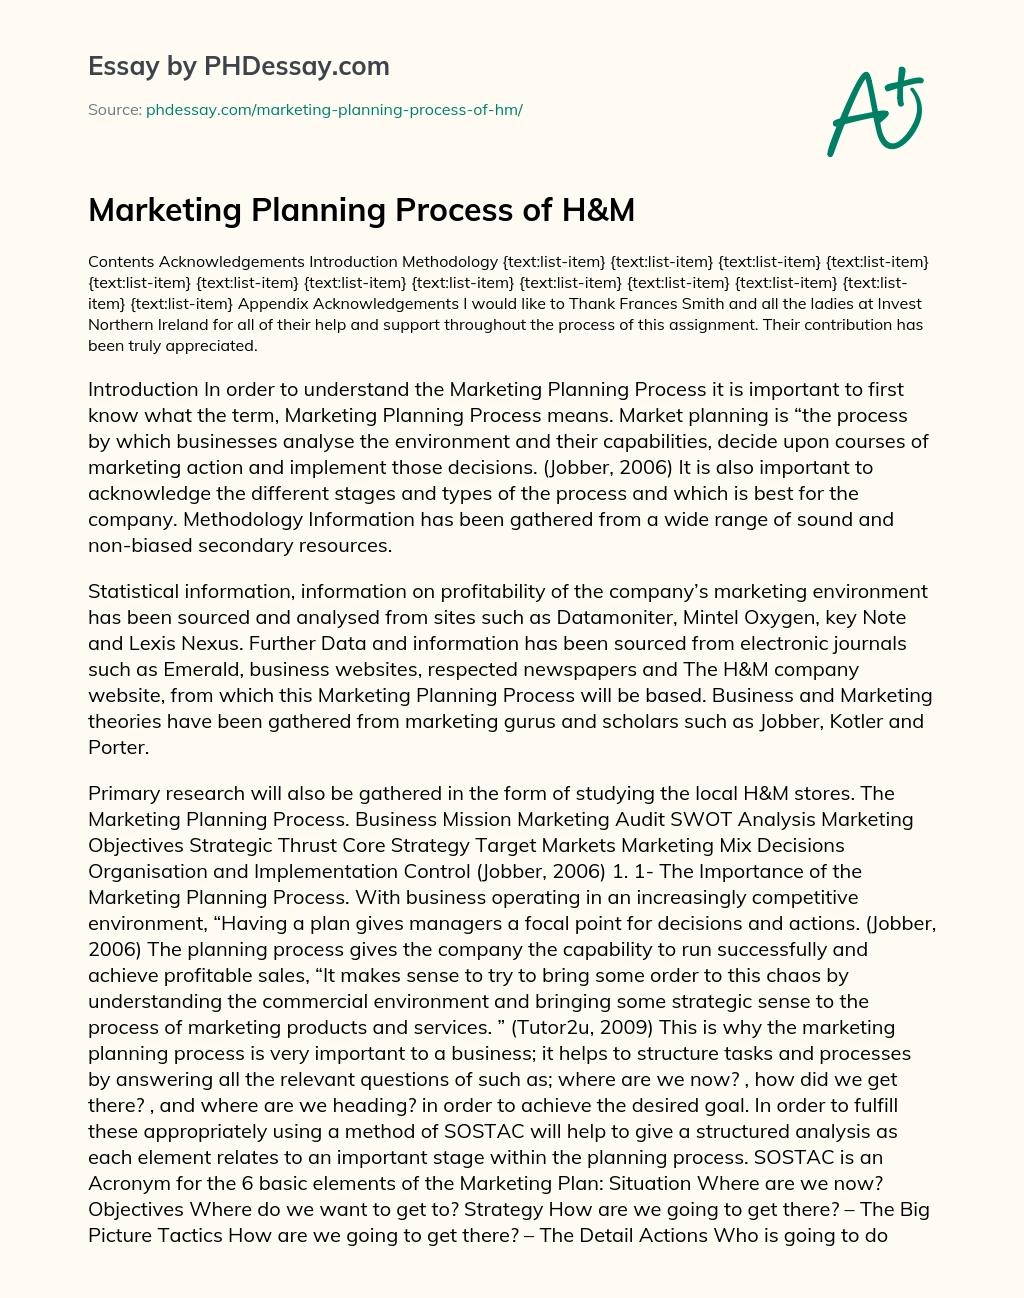 Marketing Planning Process of H&M essay